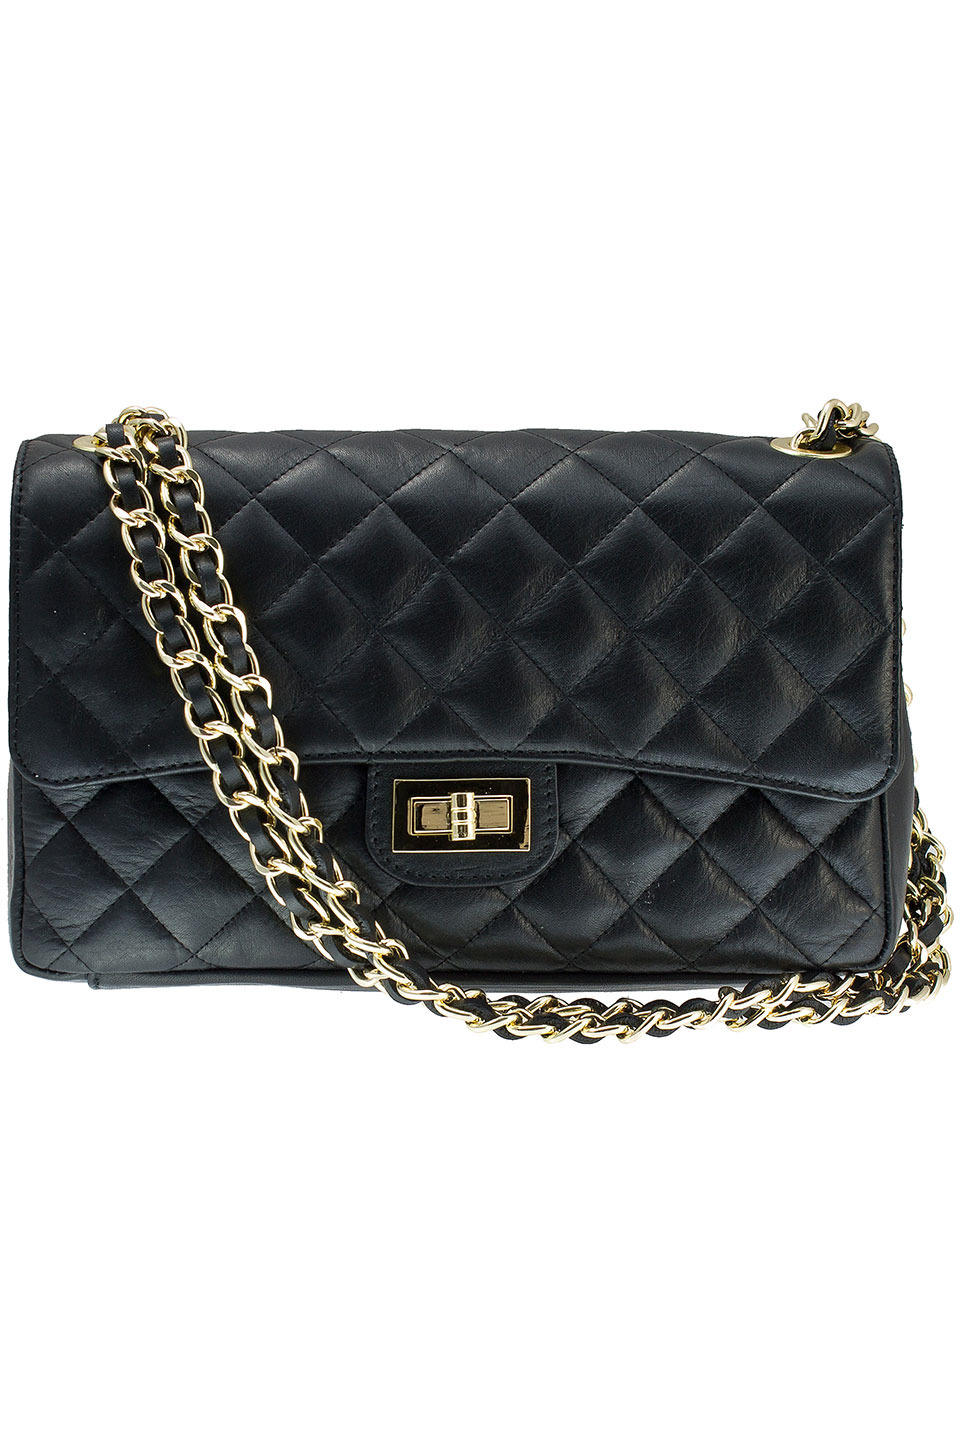 Markese Handbags. Markese Italian Leather Totebag Handbag Shoulder Bag - Womens Bags.